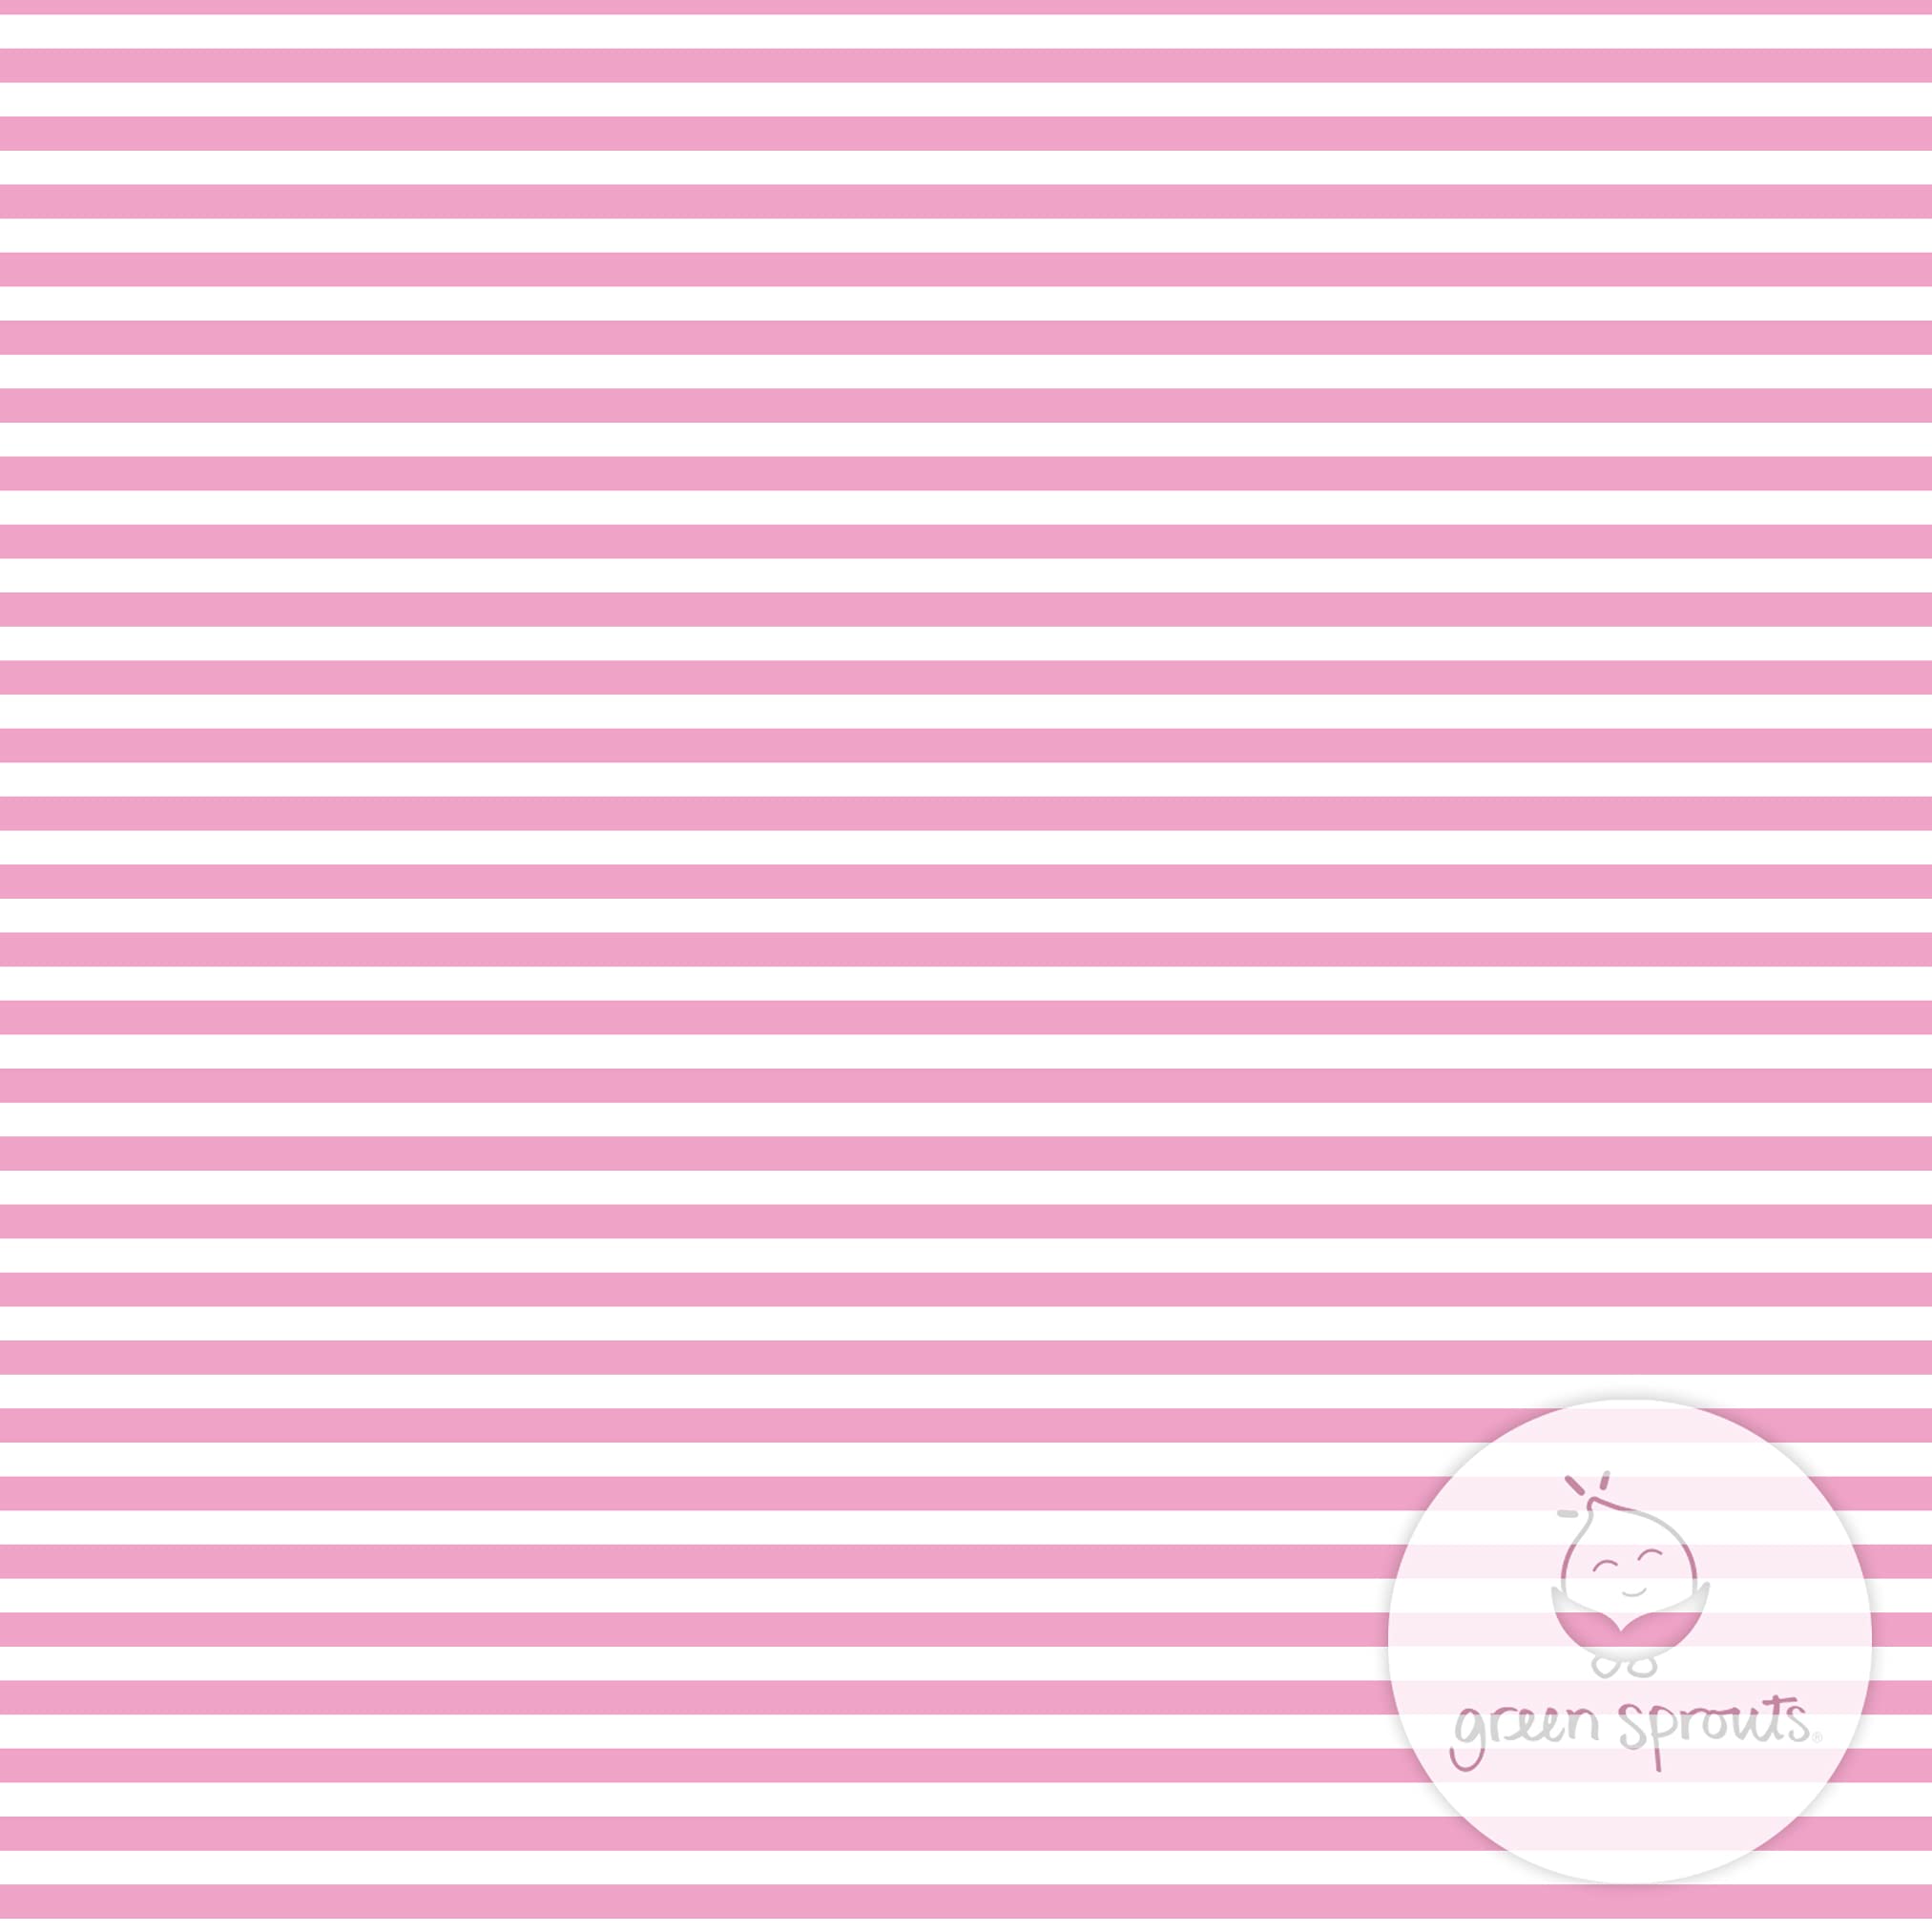 i Play Girls Swim Diaper Pink Pinstripe - 12 Months